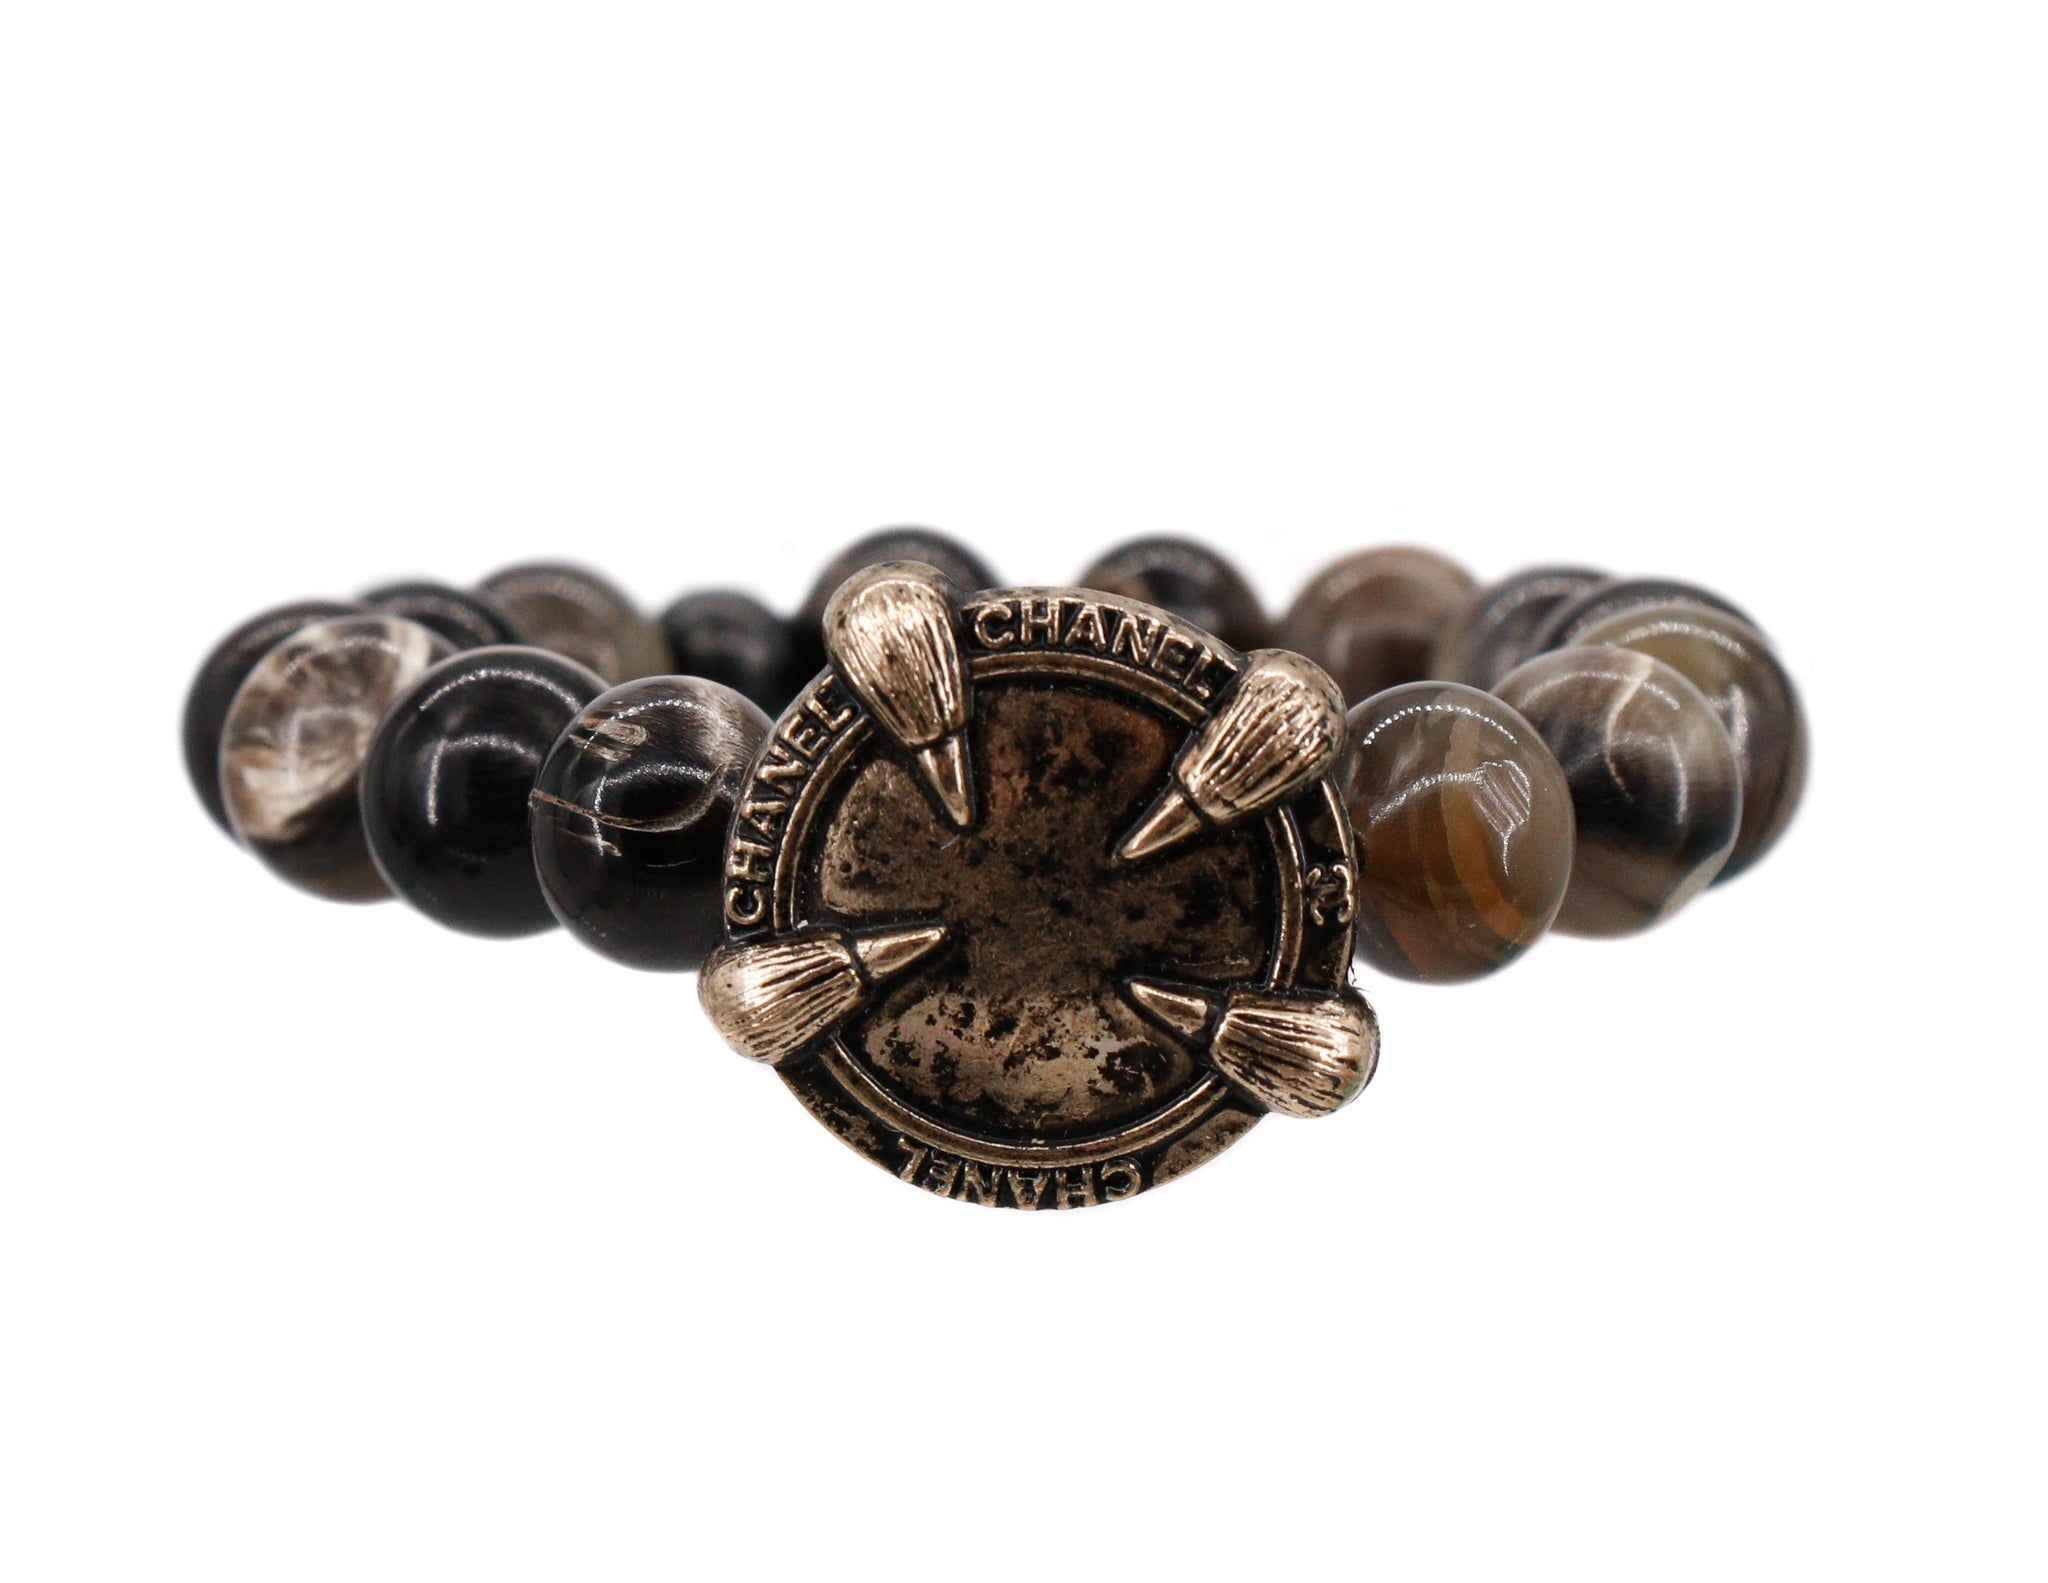 Buffalo horn with repurposed designer button bracelet